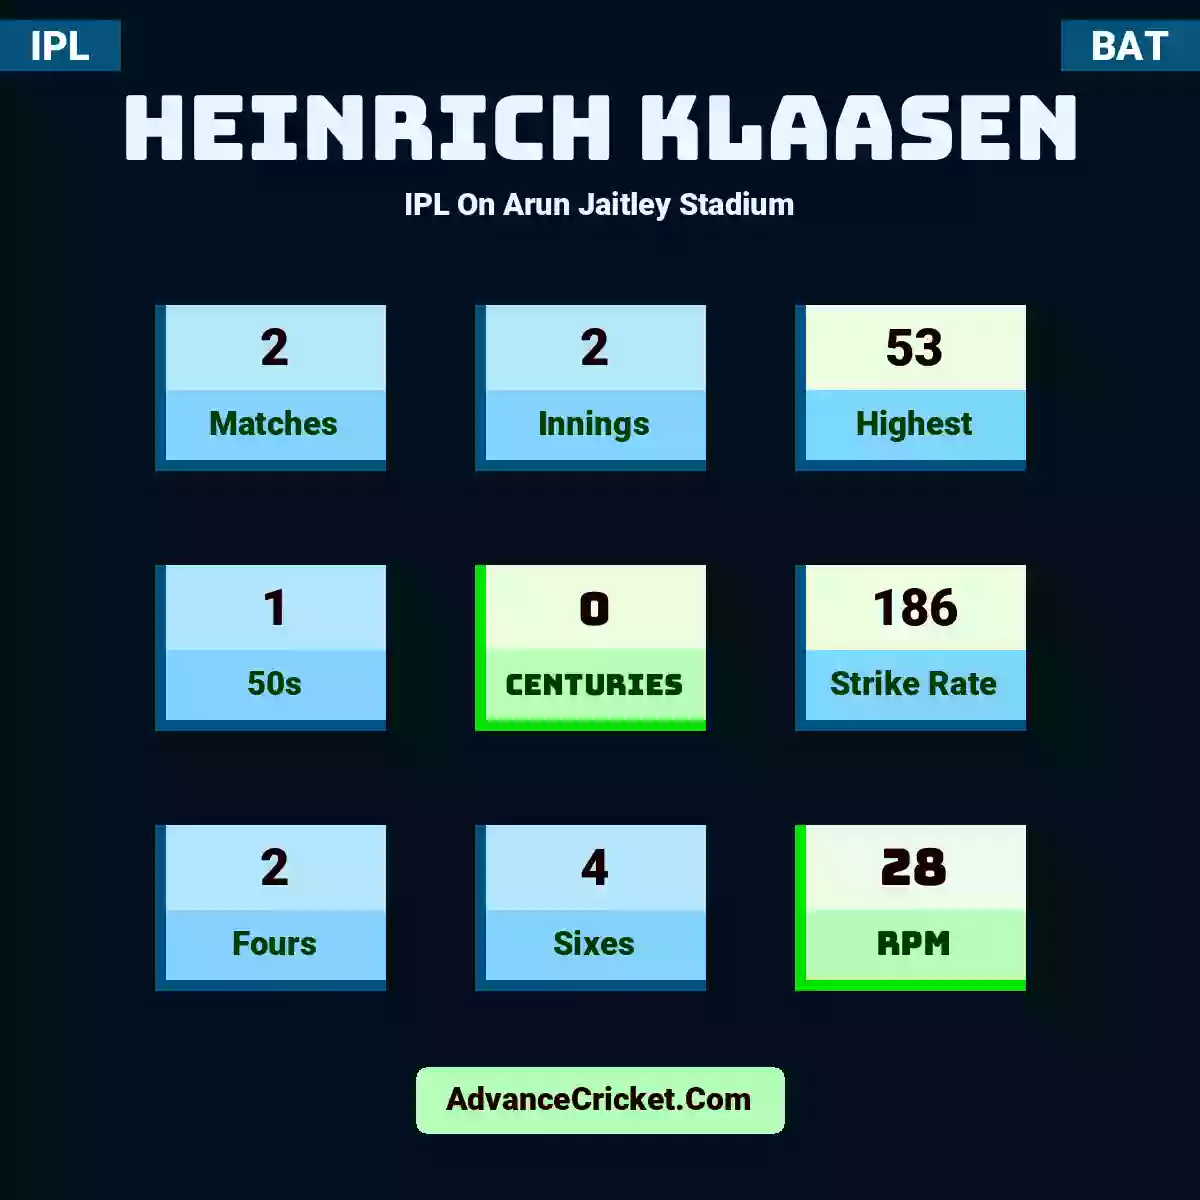 Heinrich Klaasen IPL  On Arun Jaitley Stadium, Heinrich Klaasen played 2 matches, scored 53 runs as highest, 1 half-centuries, and 0 centuries, with a strike rate of 186. H.Klaasen hit 2 fours and 4 sixes, with an RPM of 28.